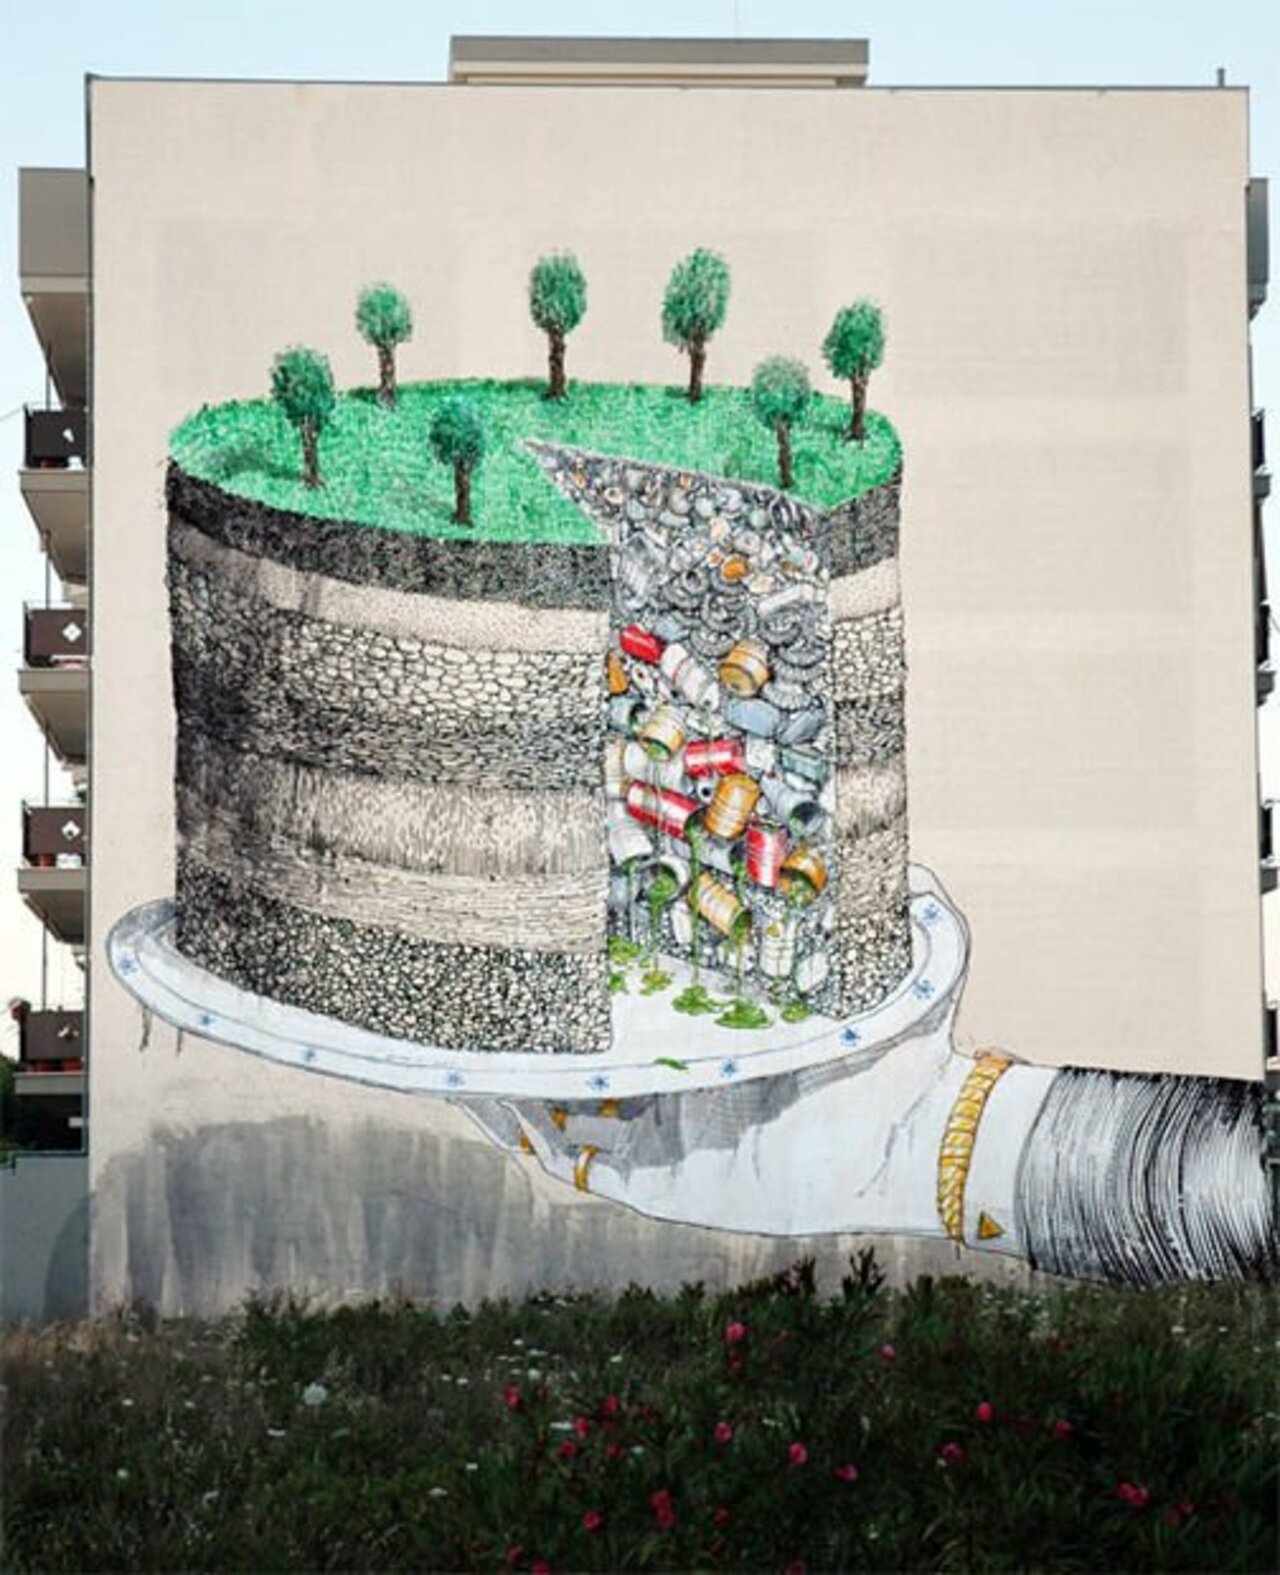 New street art by Blu Italy#streetart #mural #graffiti #art https://t.co/NikU953eed